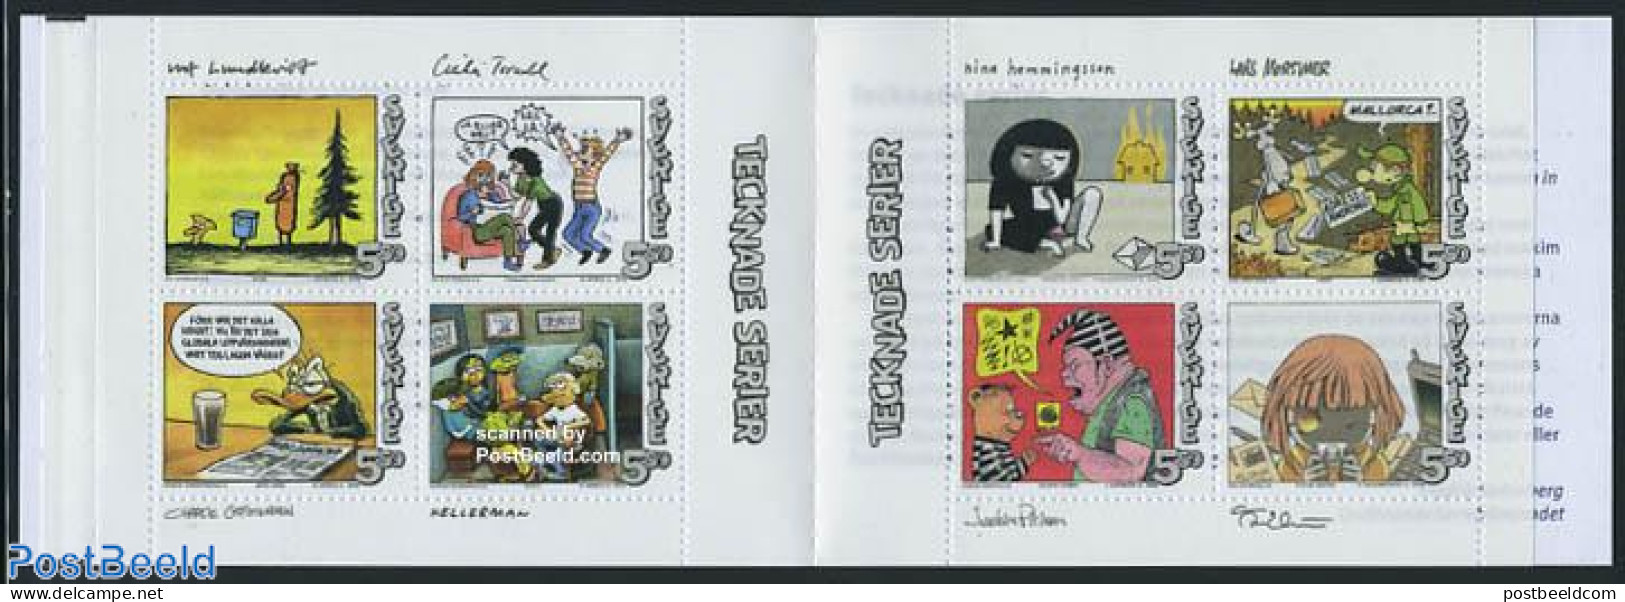 Sweden 2008 Comics 8v In Booklet, Mint NH, Stamp Booklets - Art - Comics (except Disney) - Neufs